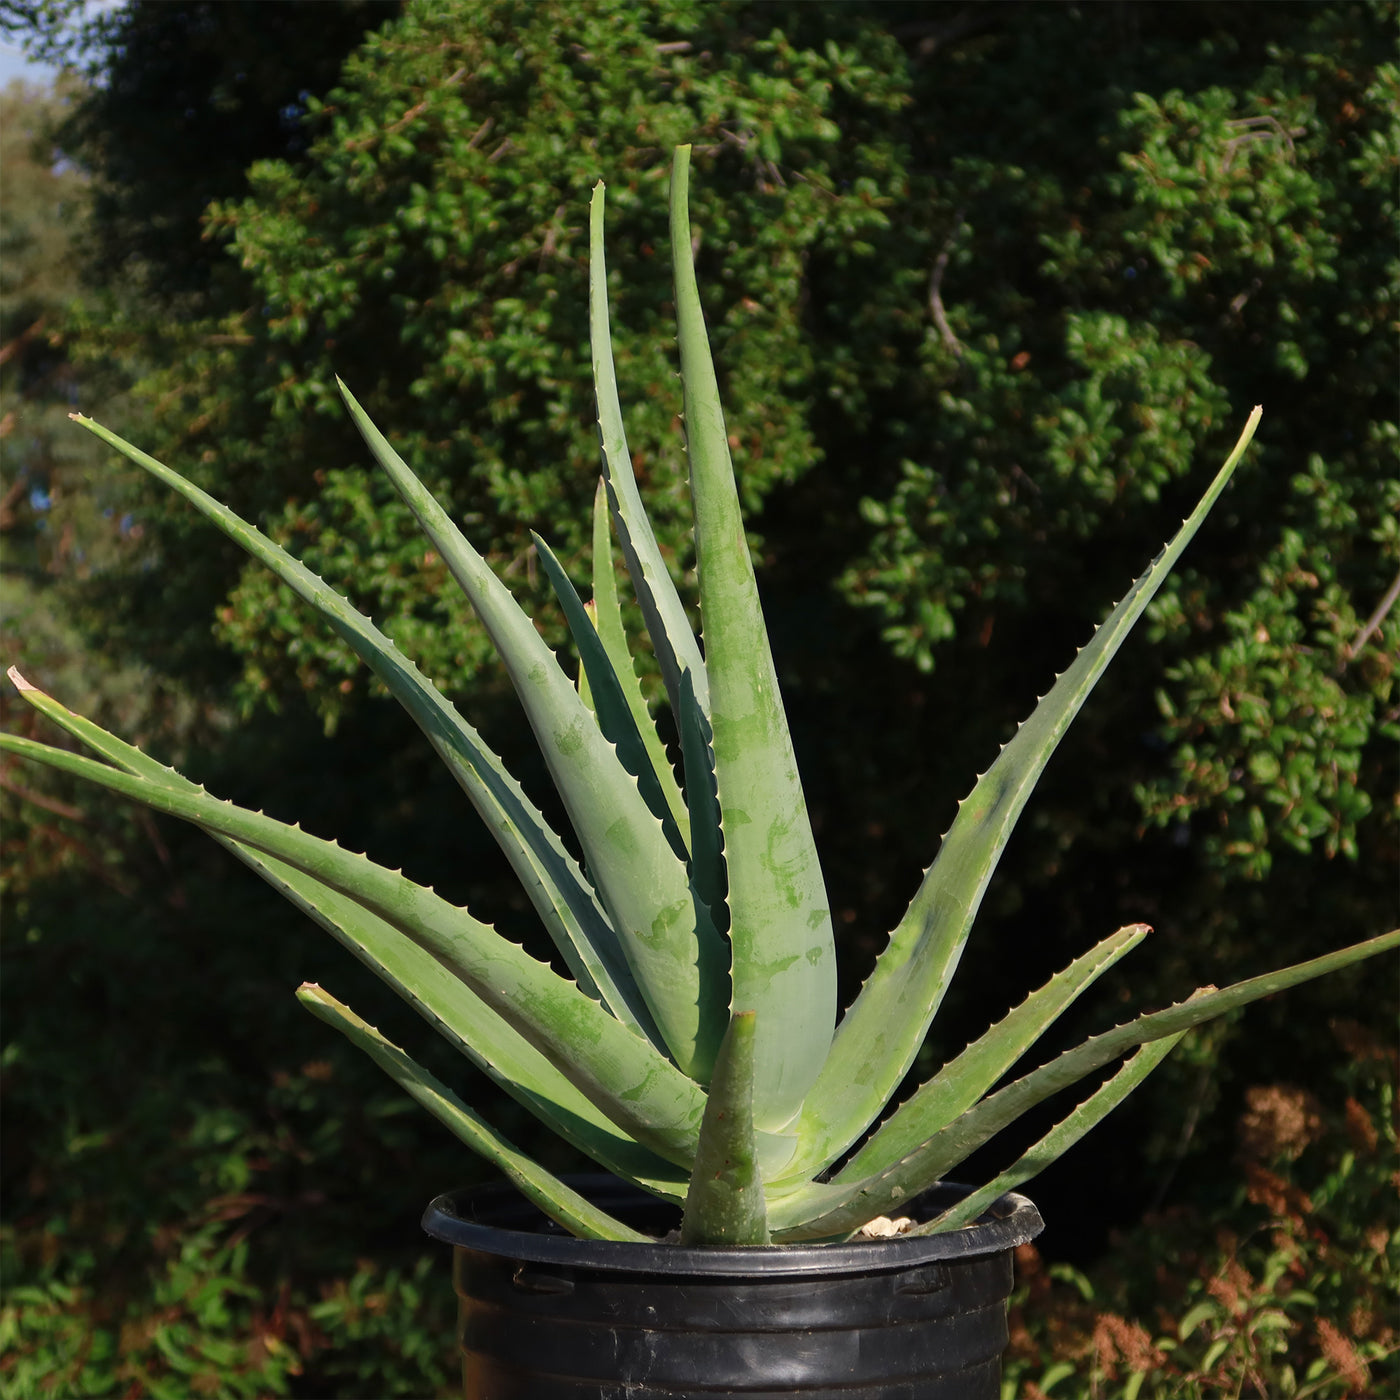 Aloe Vera - Aloe barbadensis 'miller'